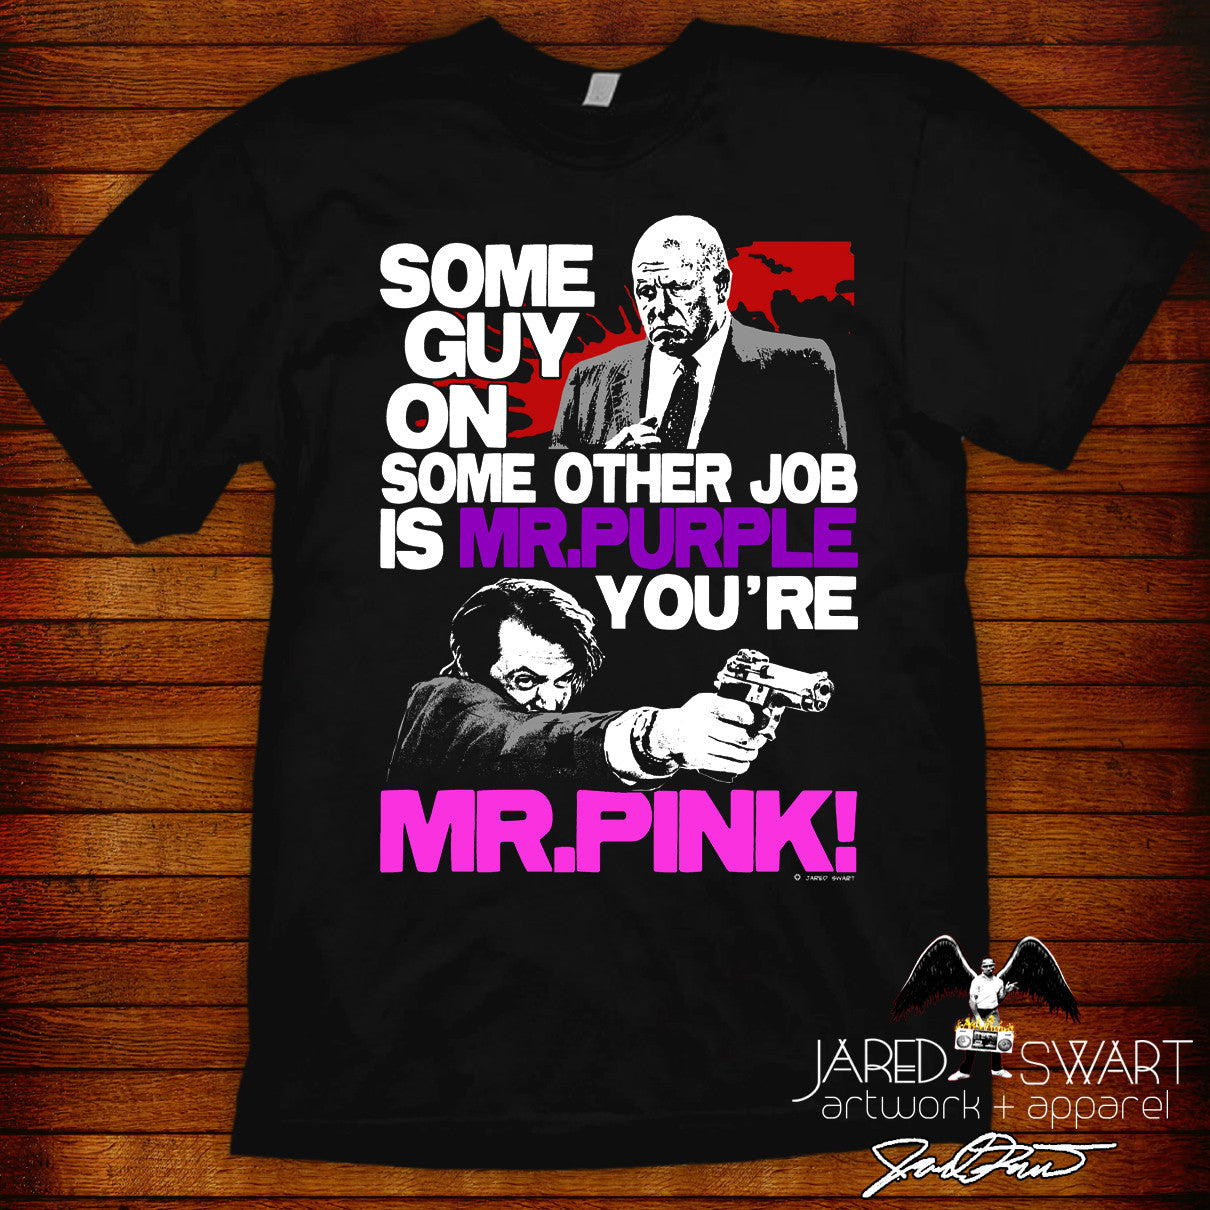 Reservoir Dogs: Mr. Pink Don't Believe In Tipping – Mondo Monster Wear